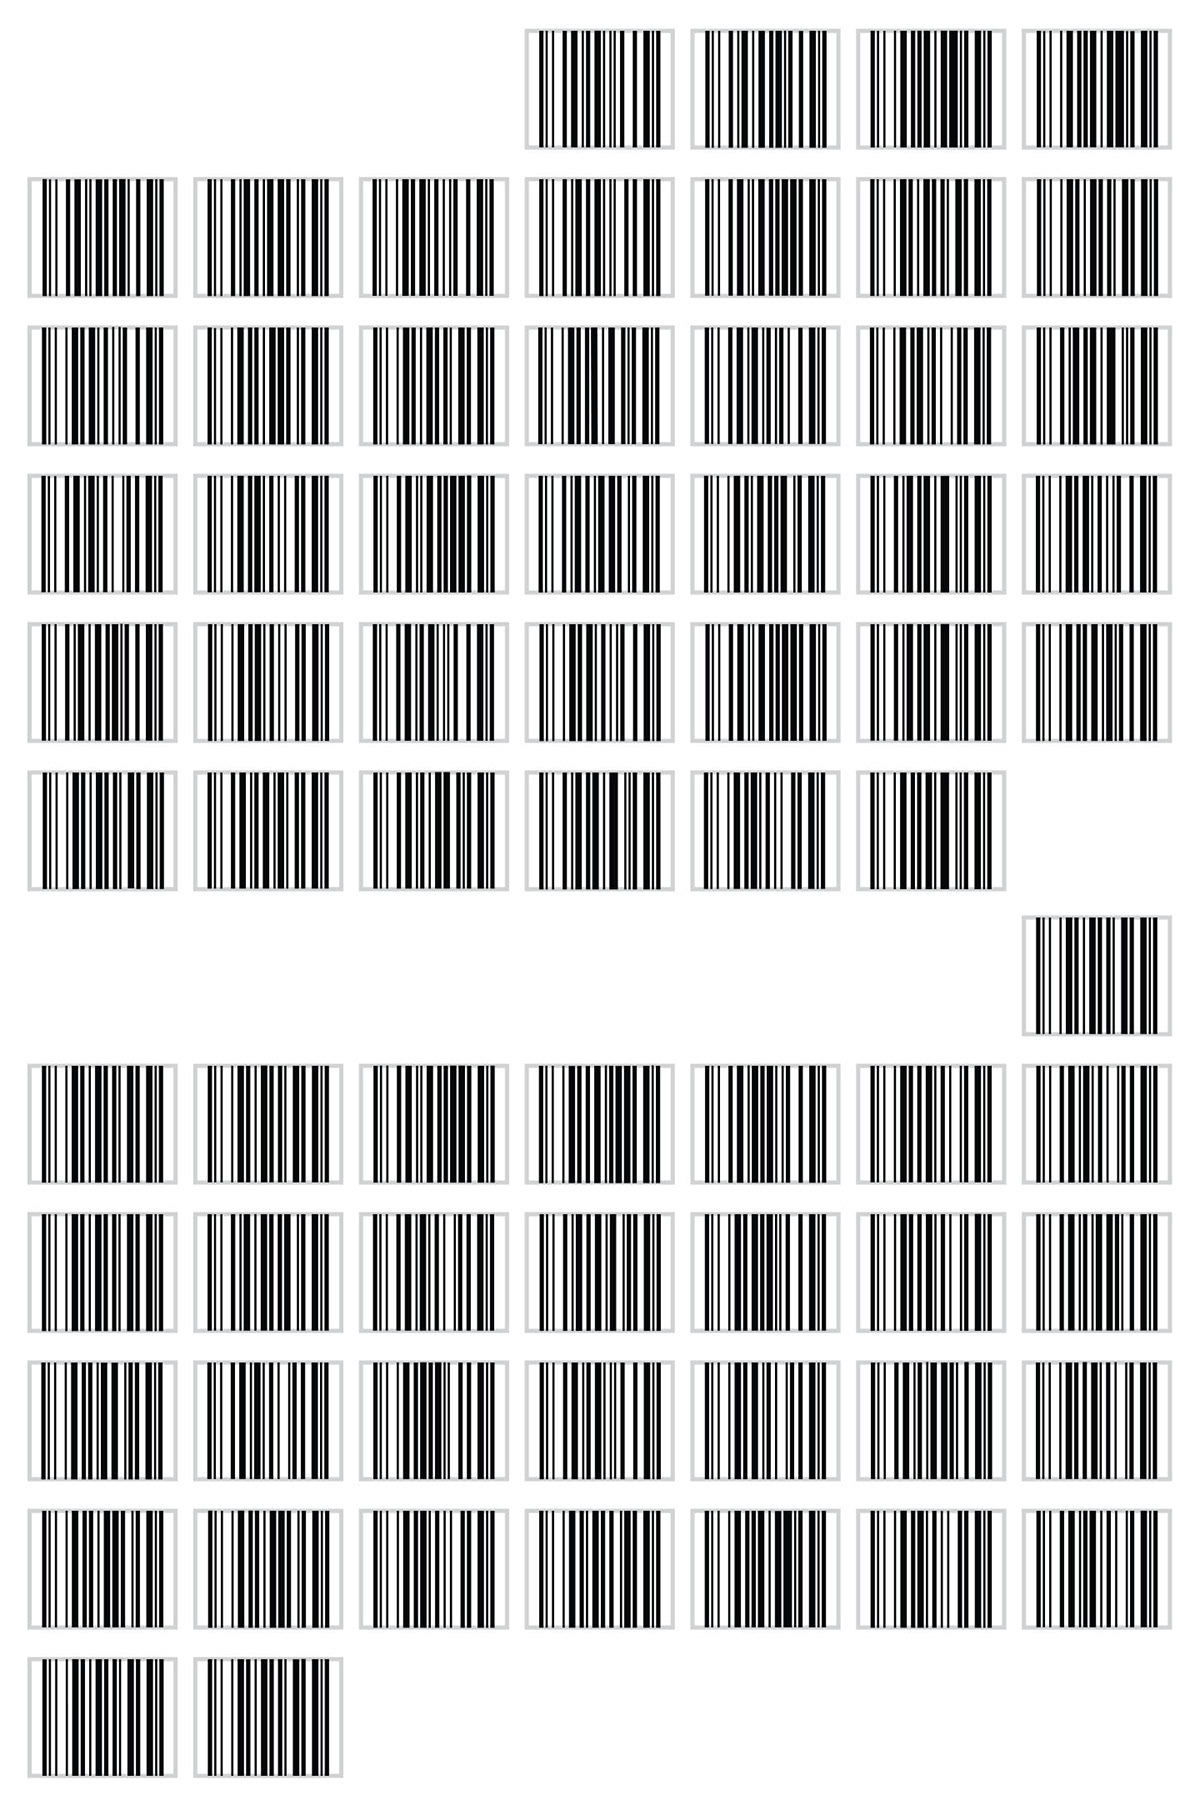 rollerblading  information  barcodes  language  Technology